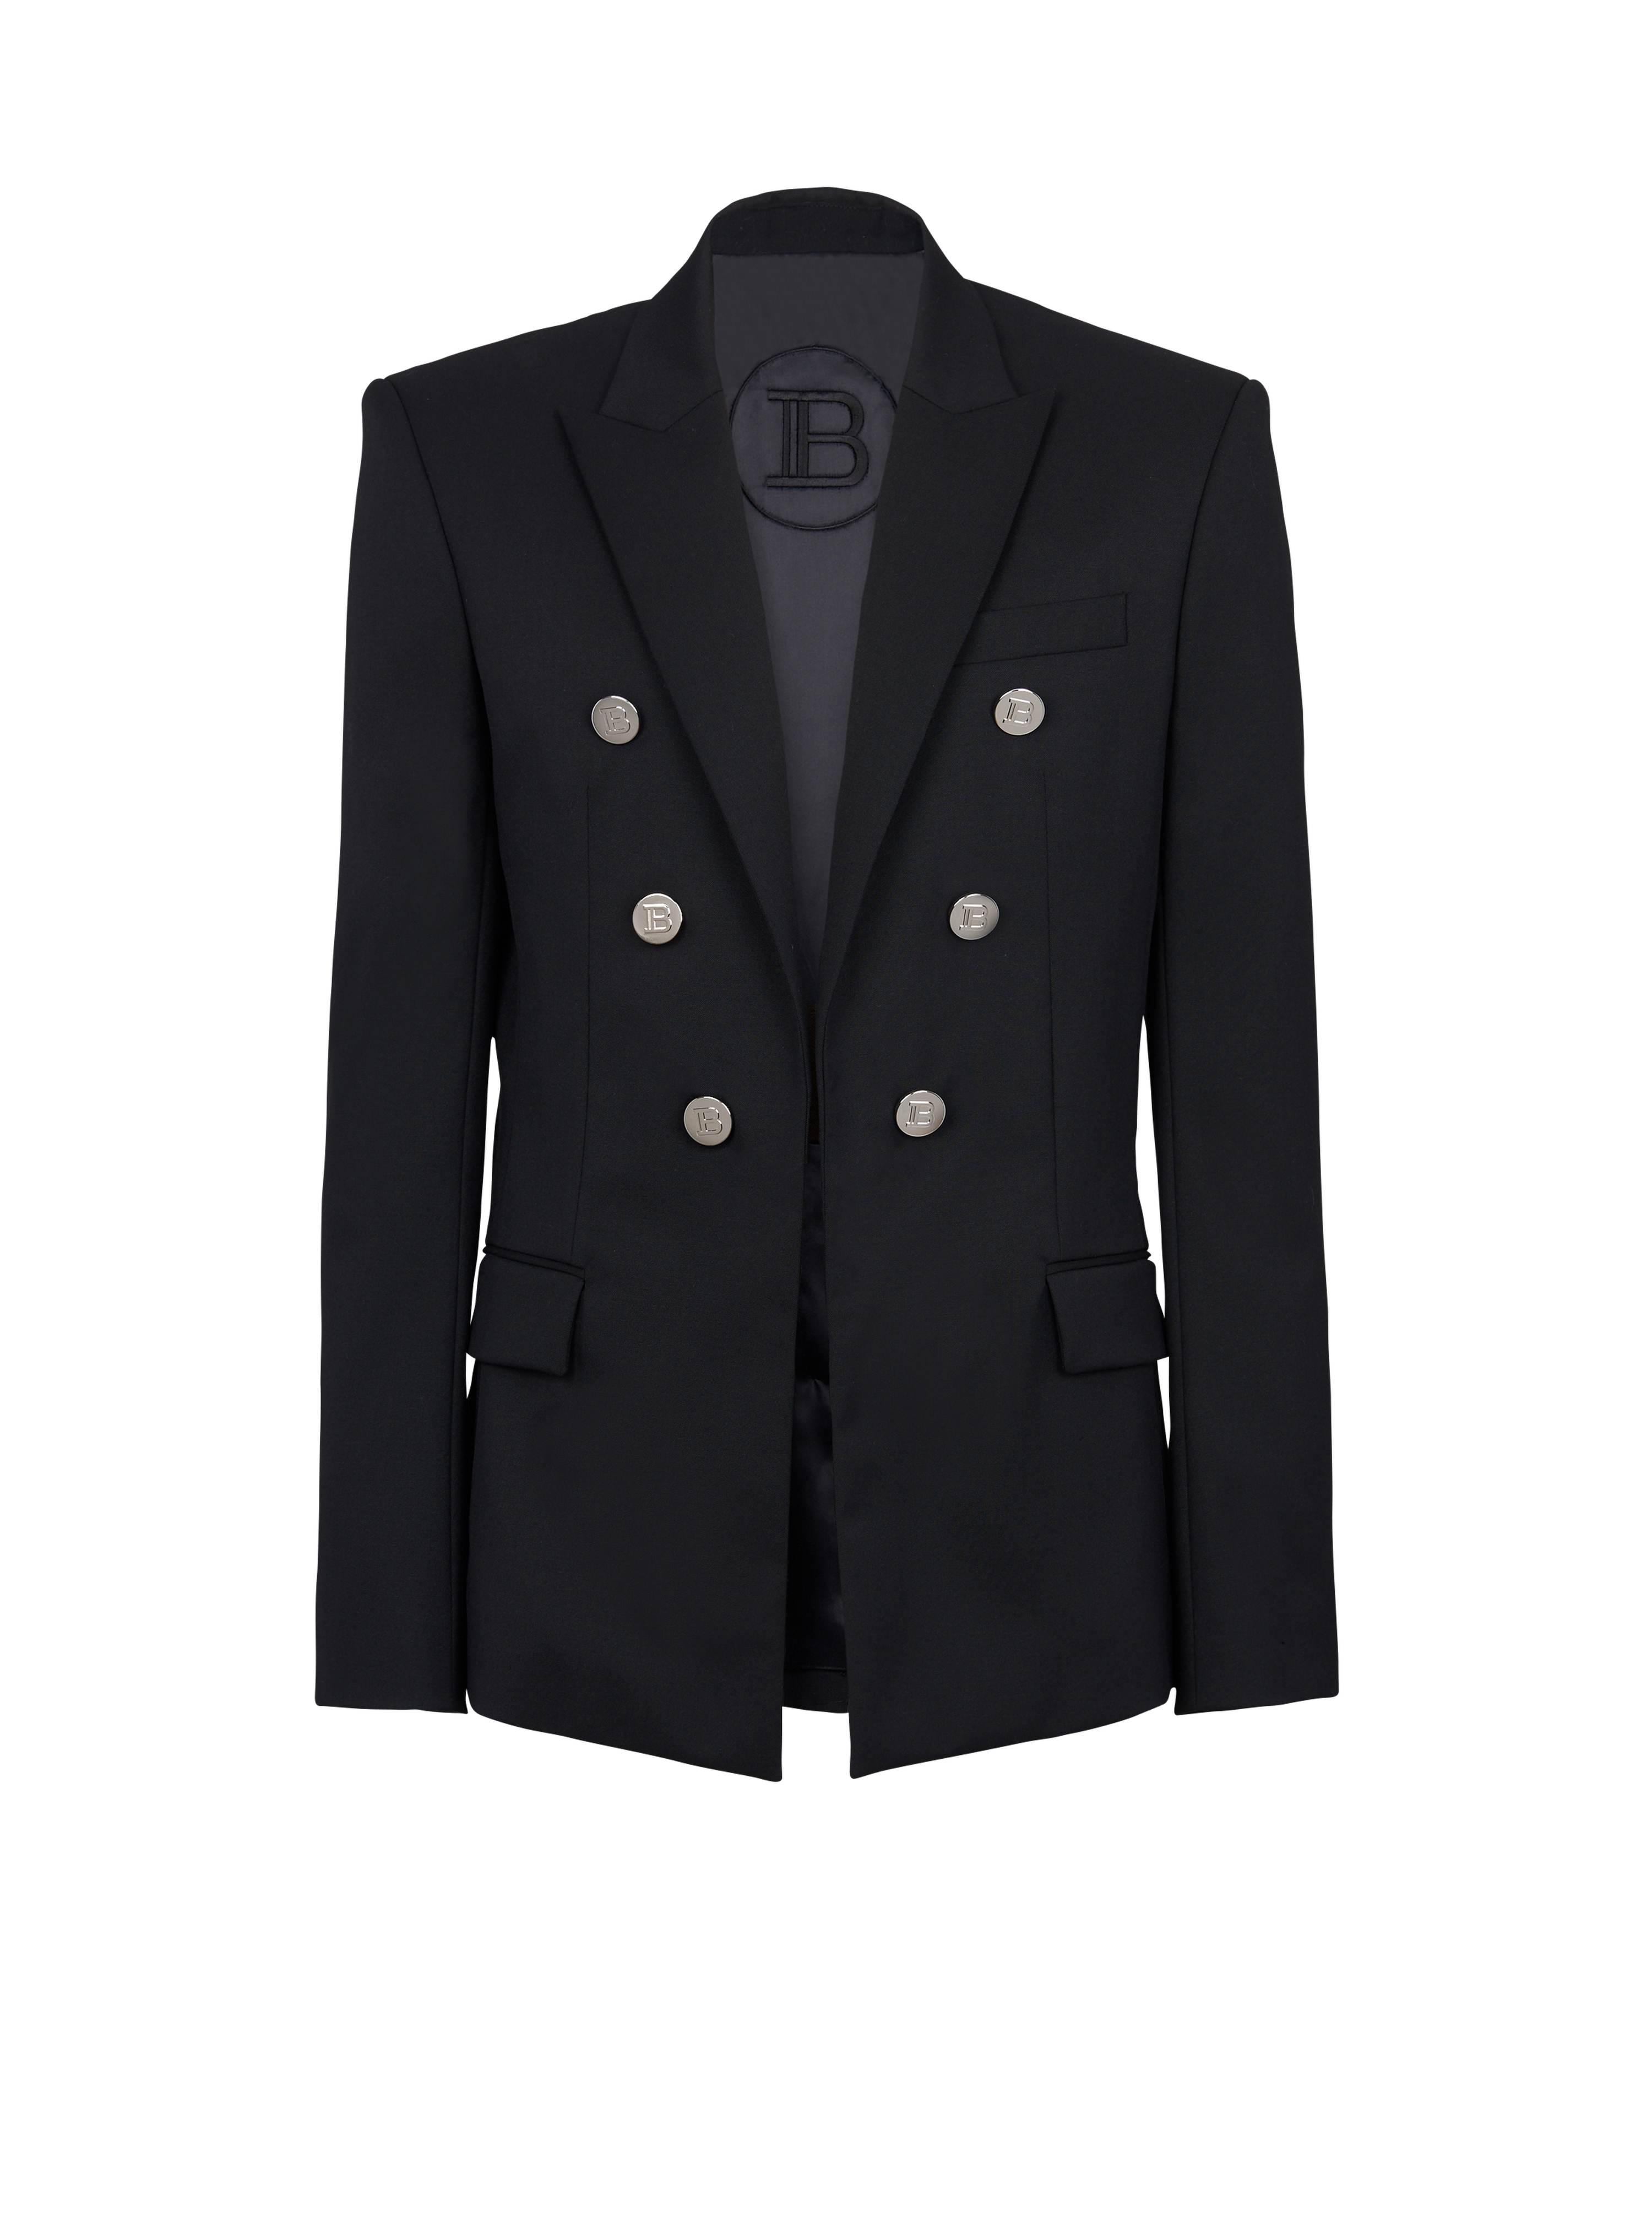 Double-breasted wool blazer, black